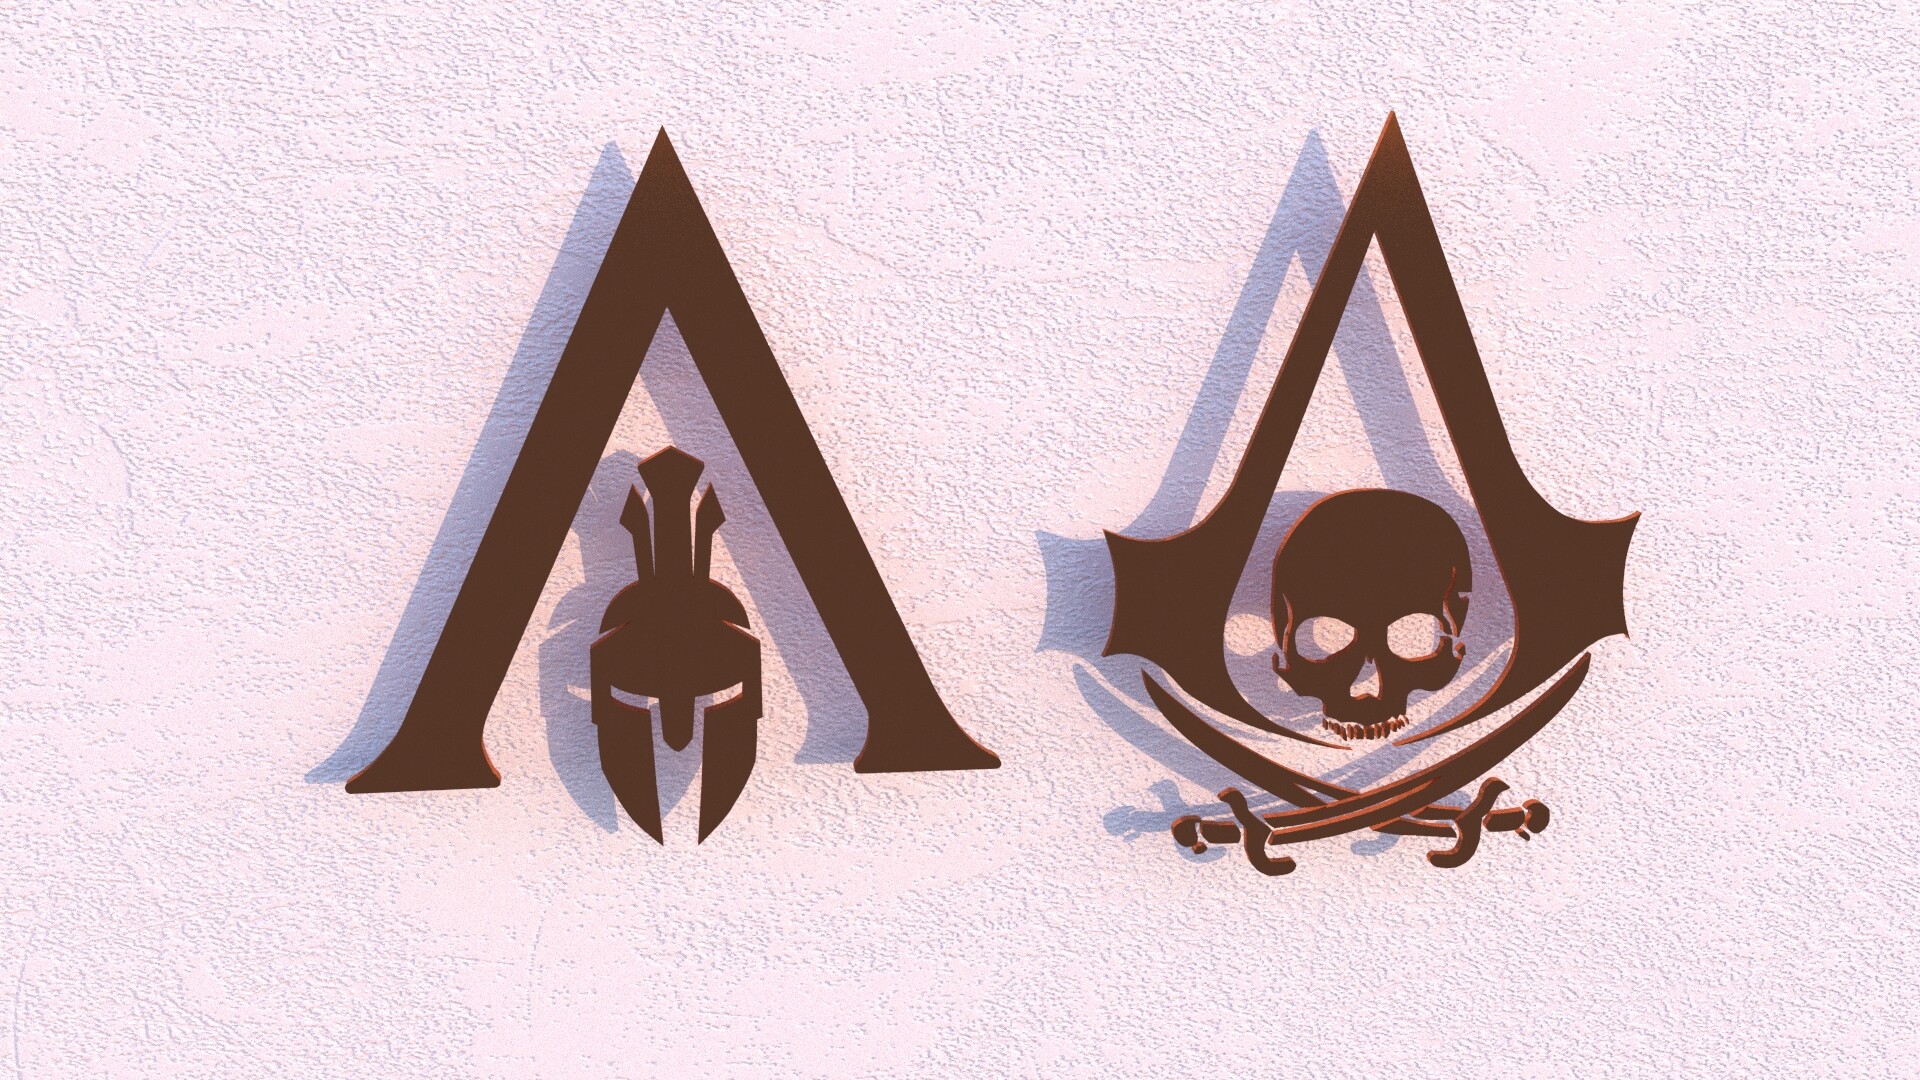 Assassins creed 2 logo, hyperdetailed, artstation